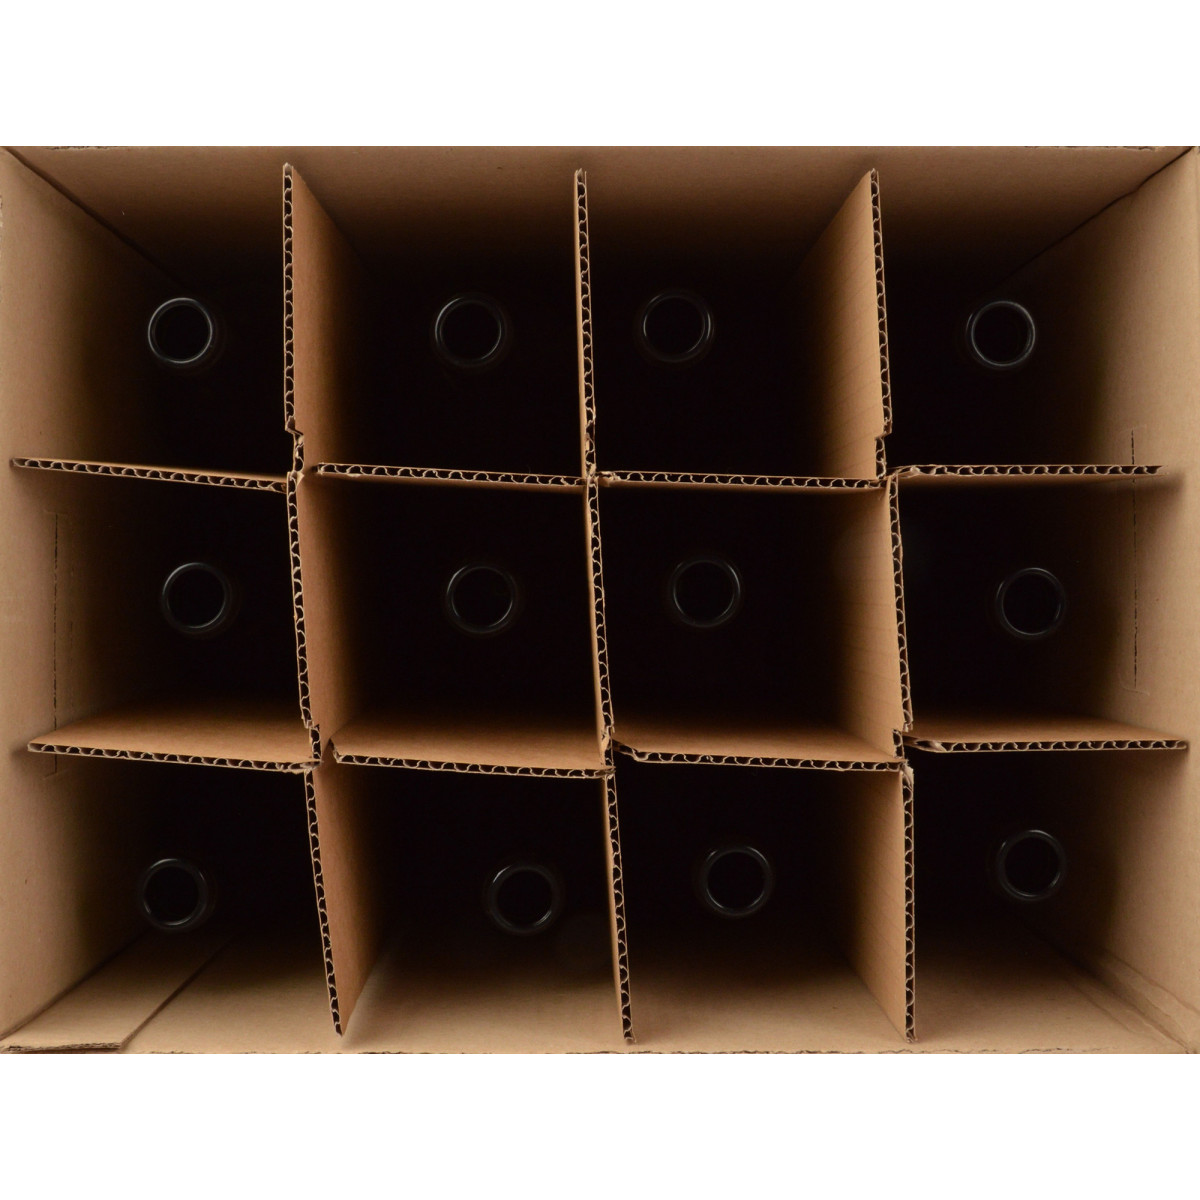 Weinflasche Bordeaux 75 cl, grün, Karton 12 St.